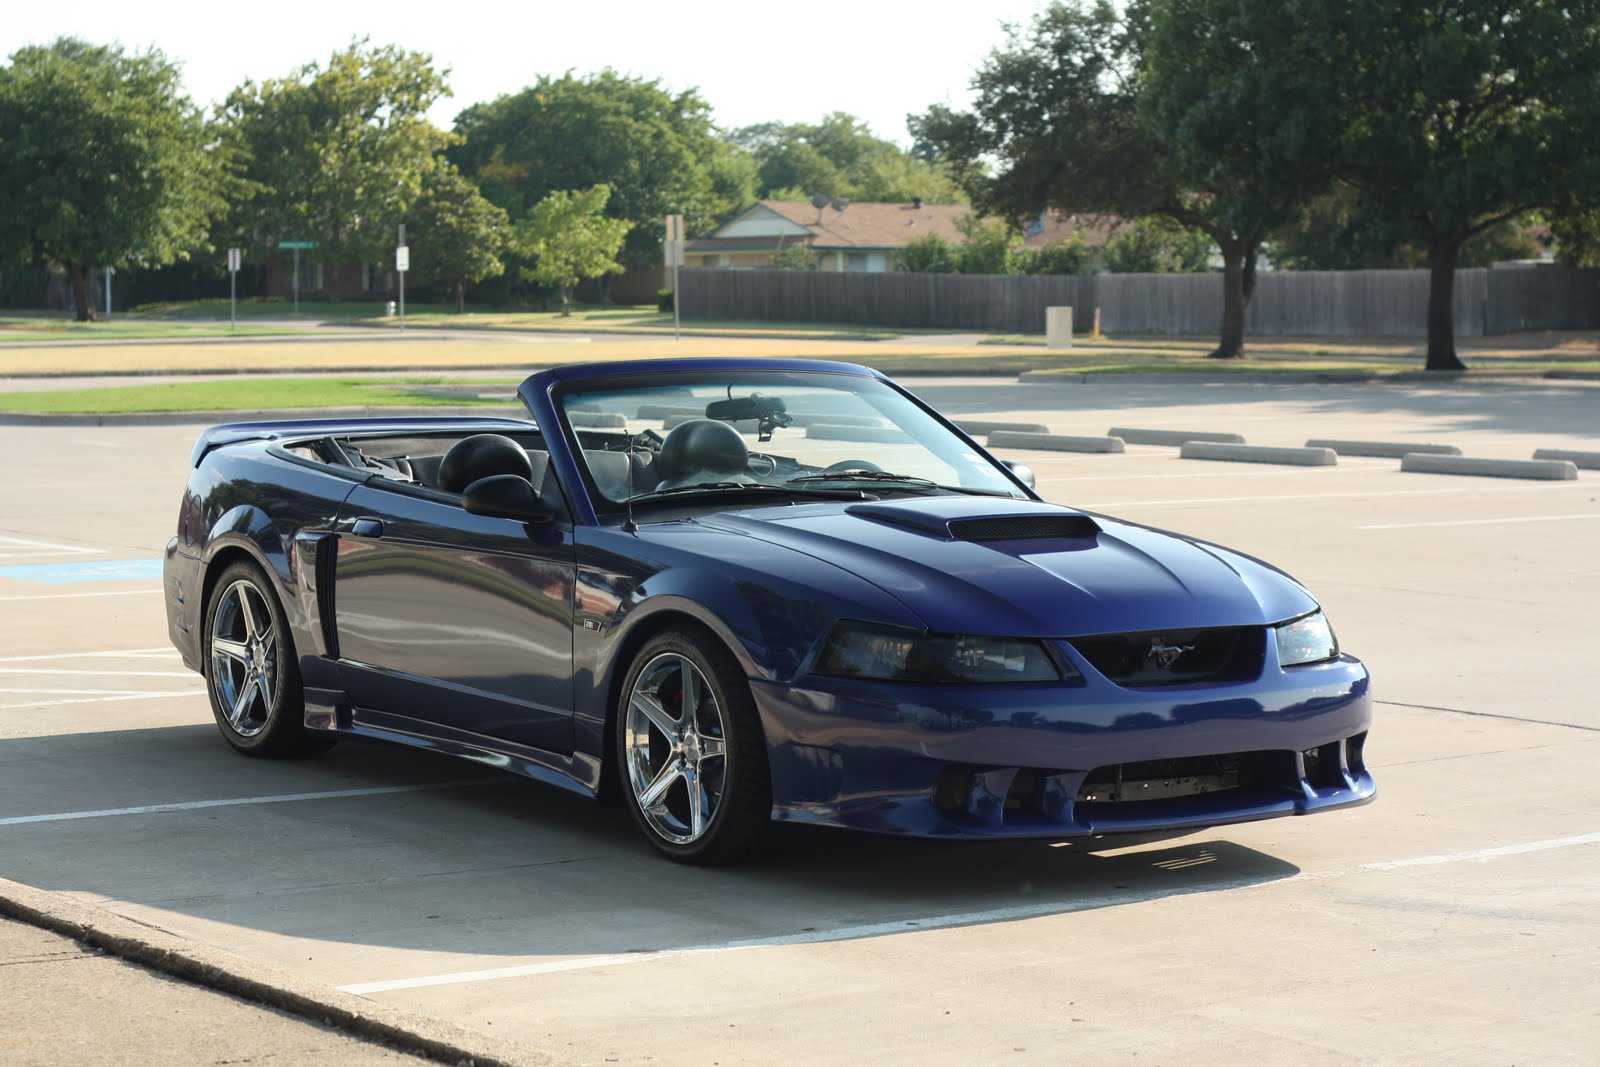 Whiteboy's Mustangs: 2003 Mustang GT convertible/Now saleen clone